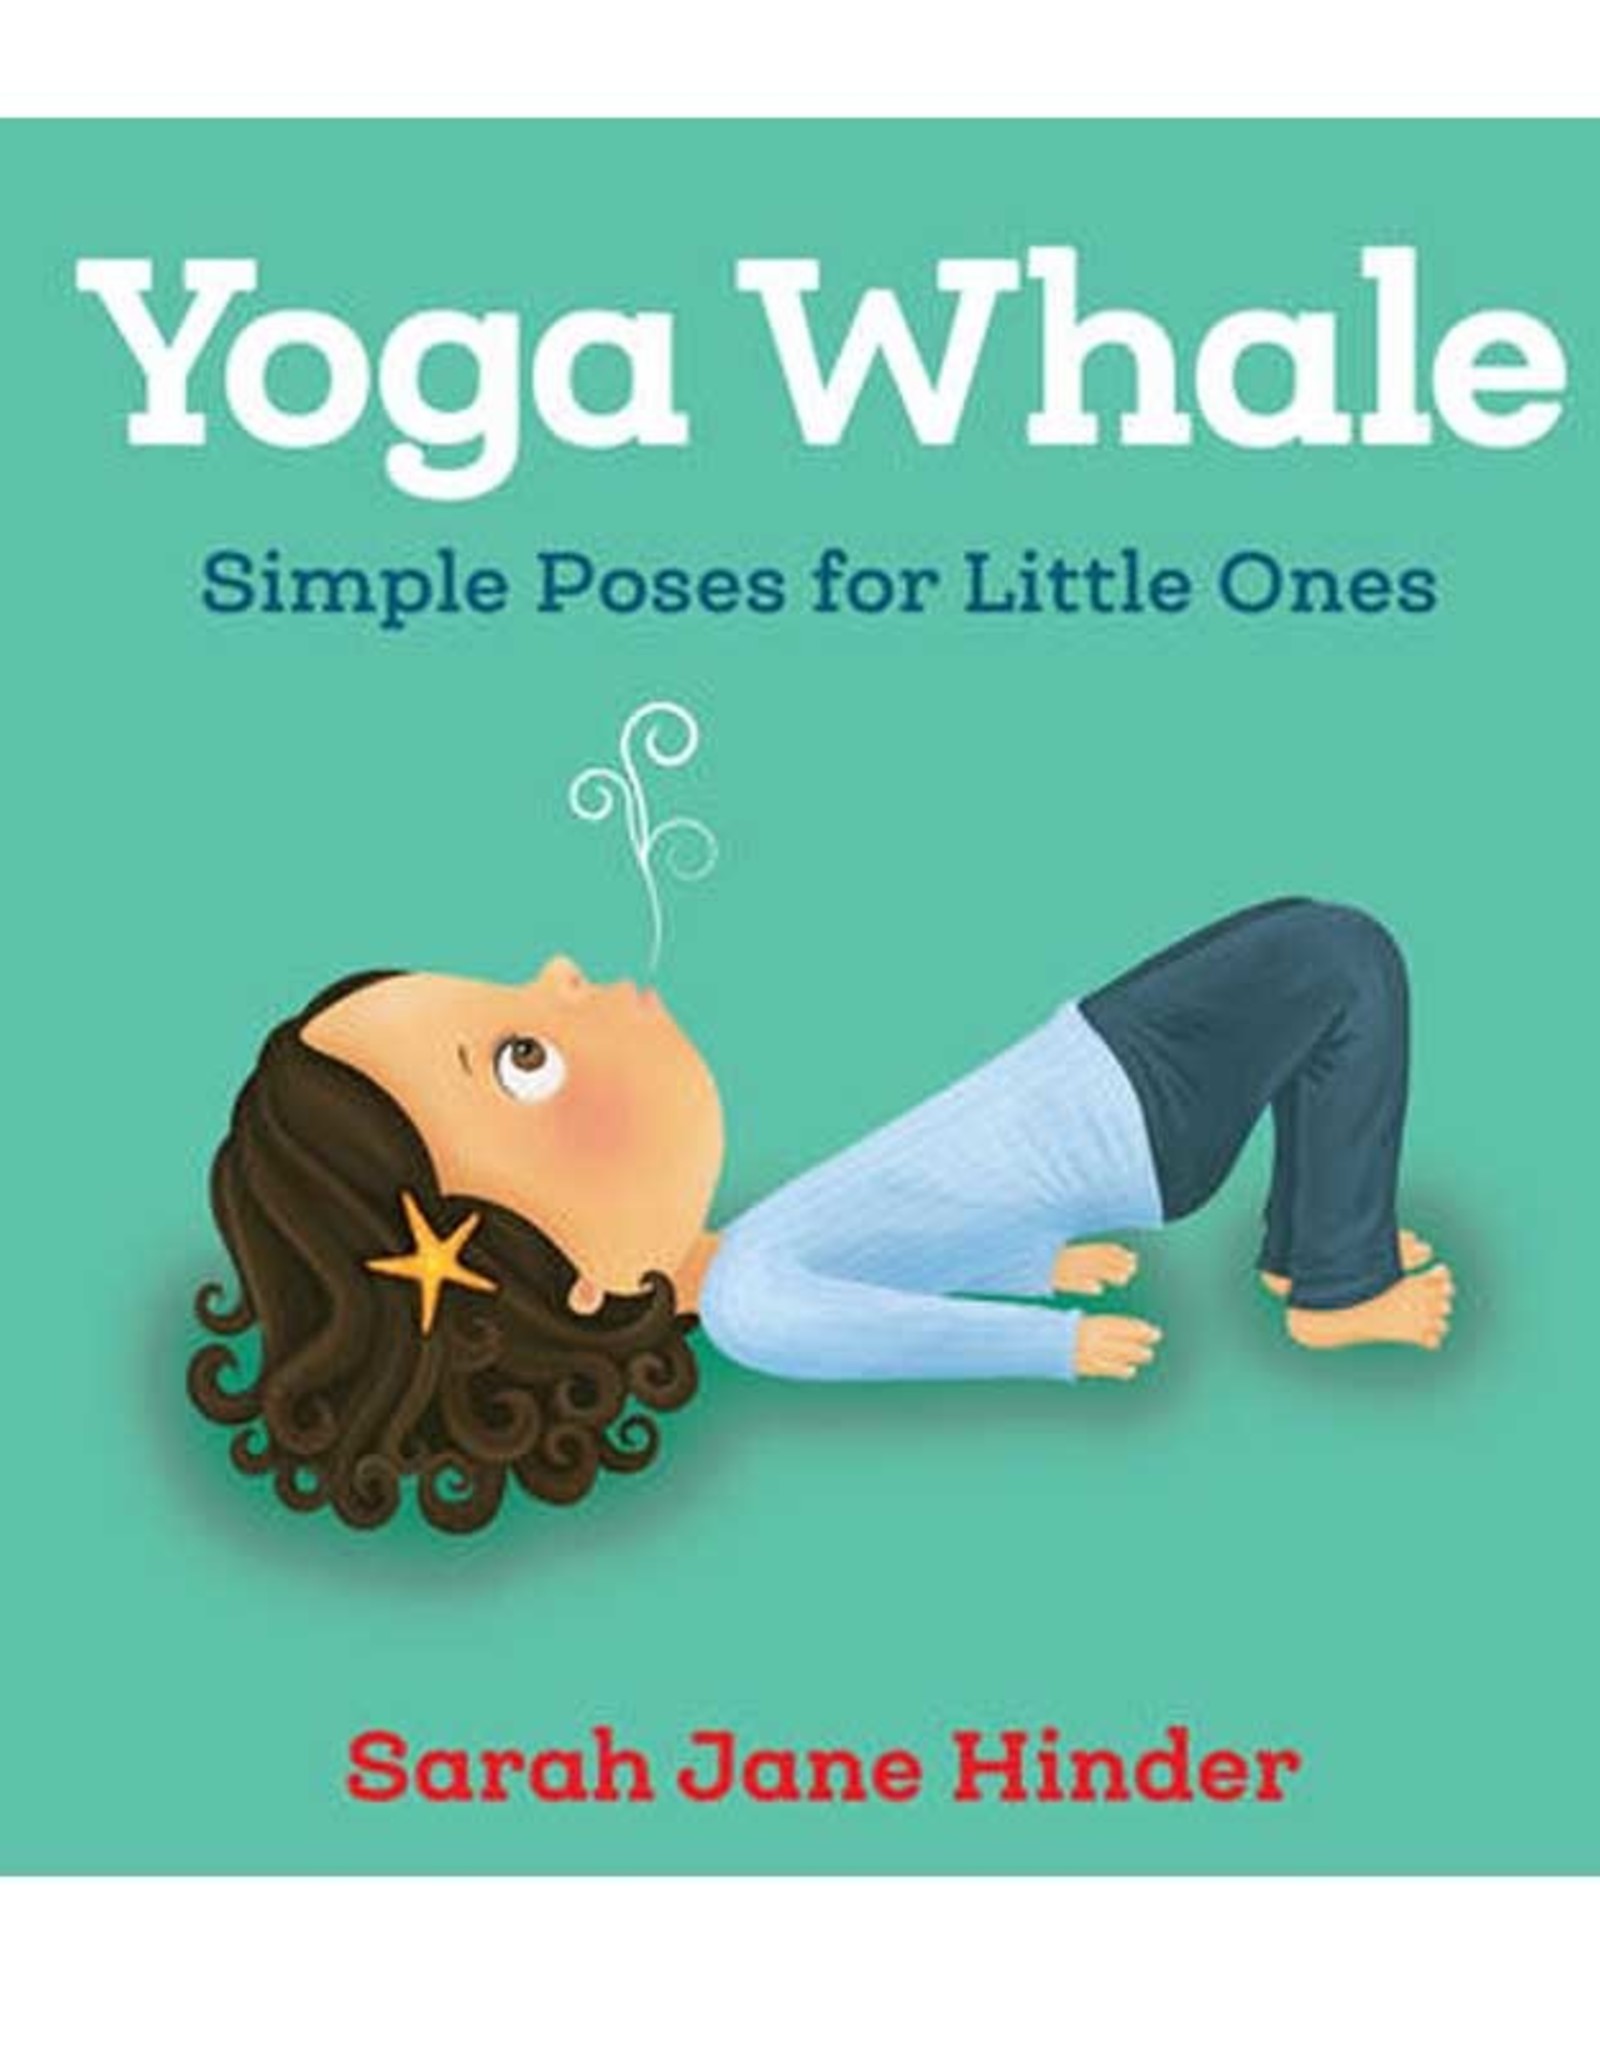 Yoga Whale by Sarah Jane Hinder